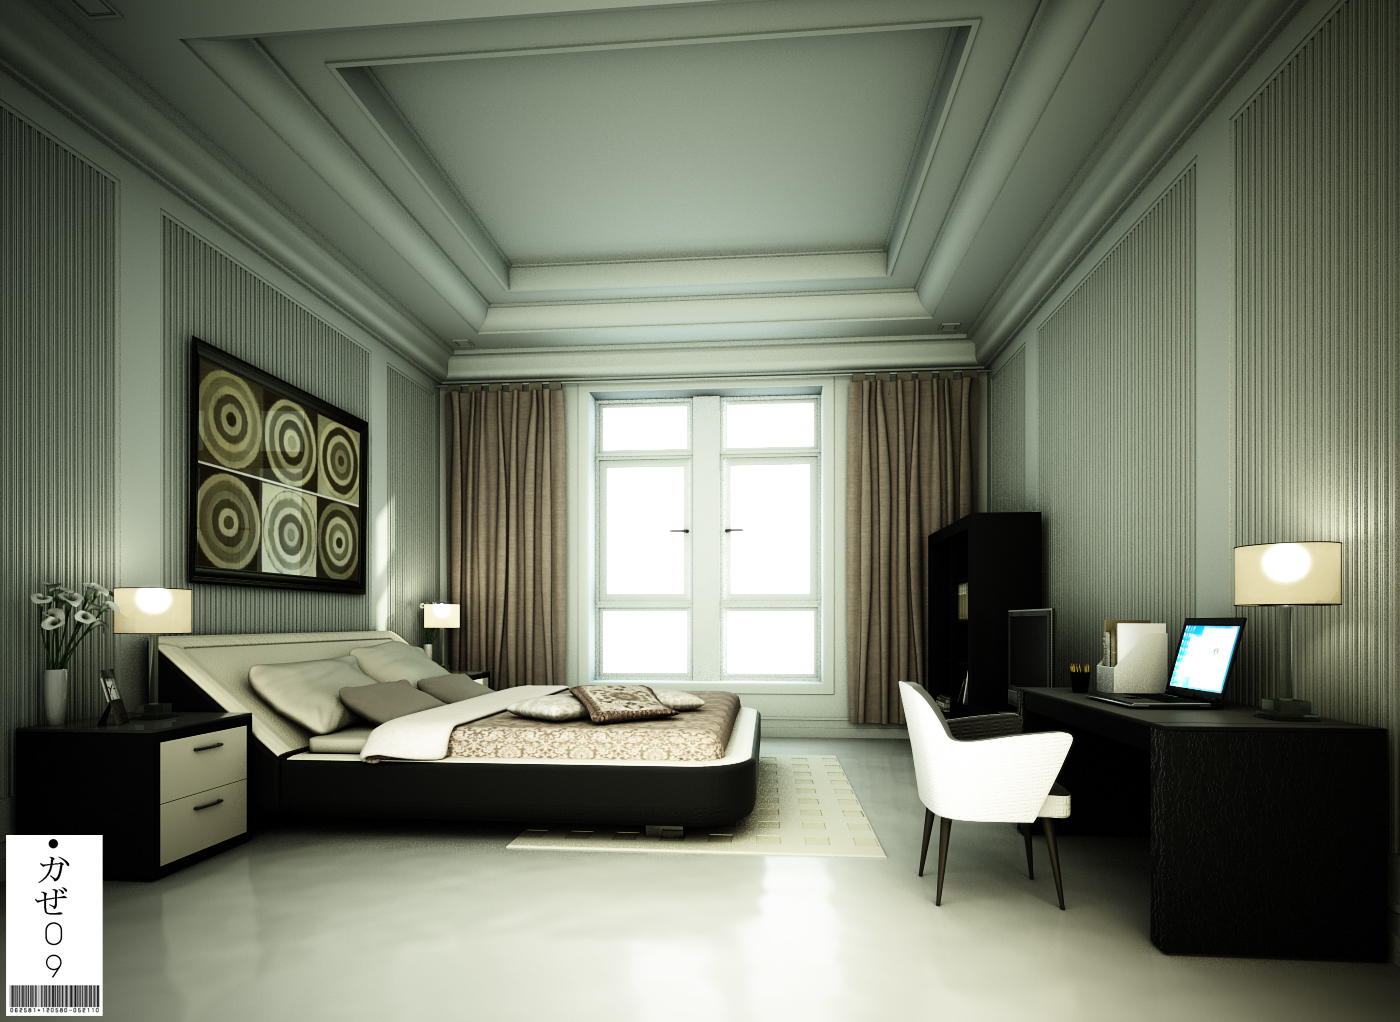 Modern Classic Bedroom 02 By Kaze09 On Deviantart